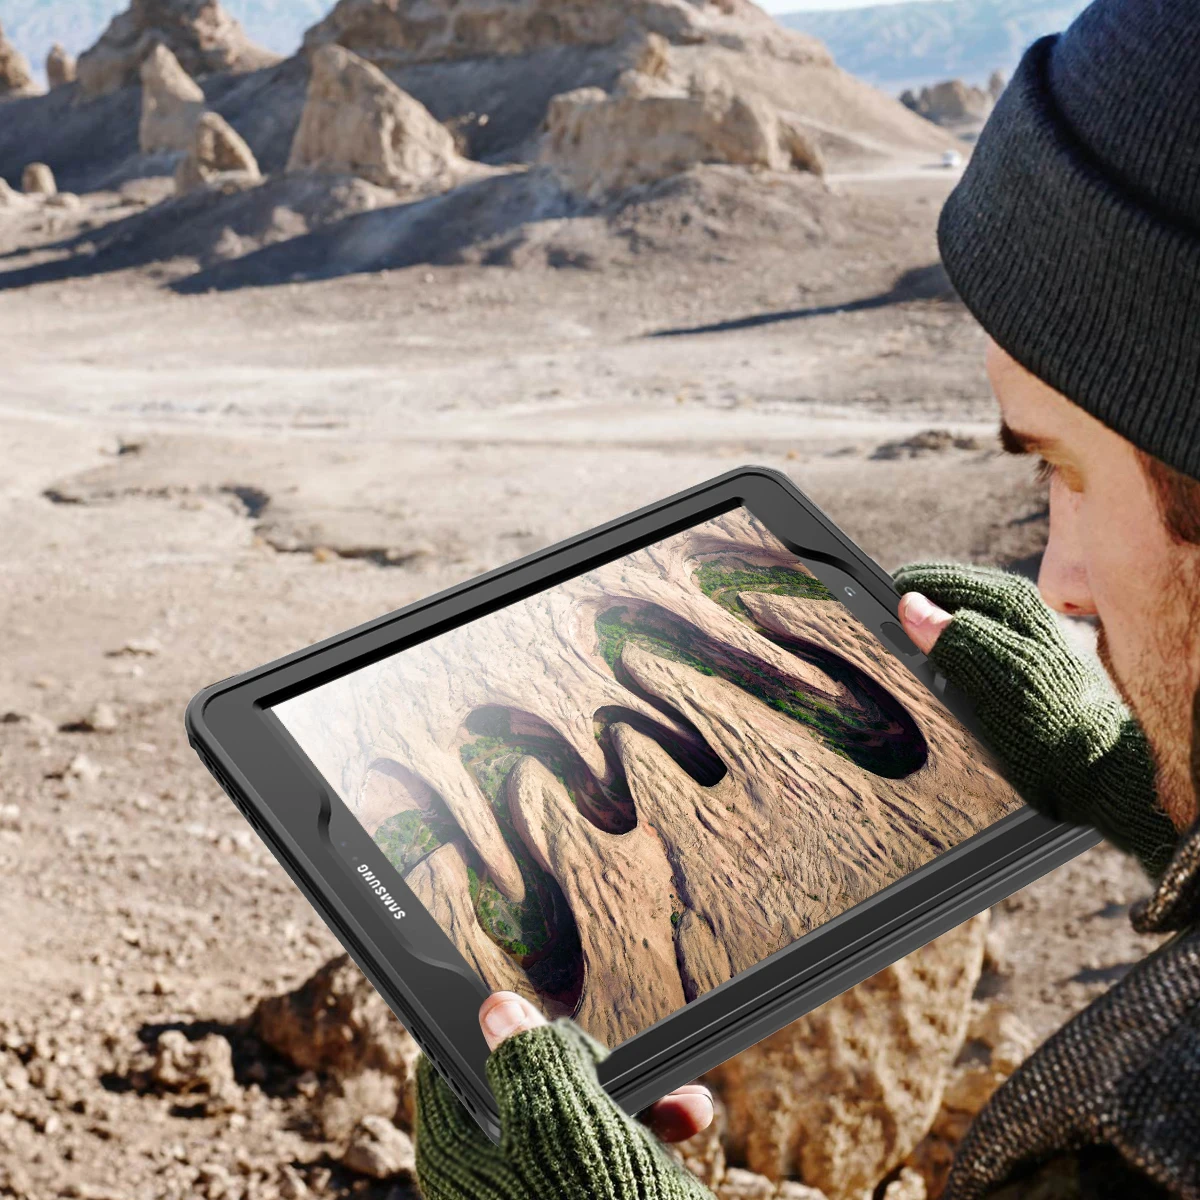 Чехол WIN Tablet чехол s для samsung Galaxy Tab S3 9,7 водонепроницаемый чехол для планшета противоударный пыленепроницаемый защитный чехол s